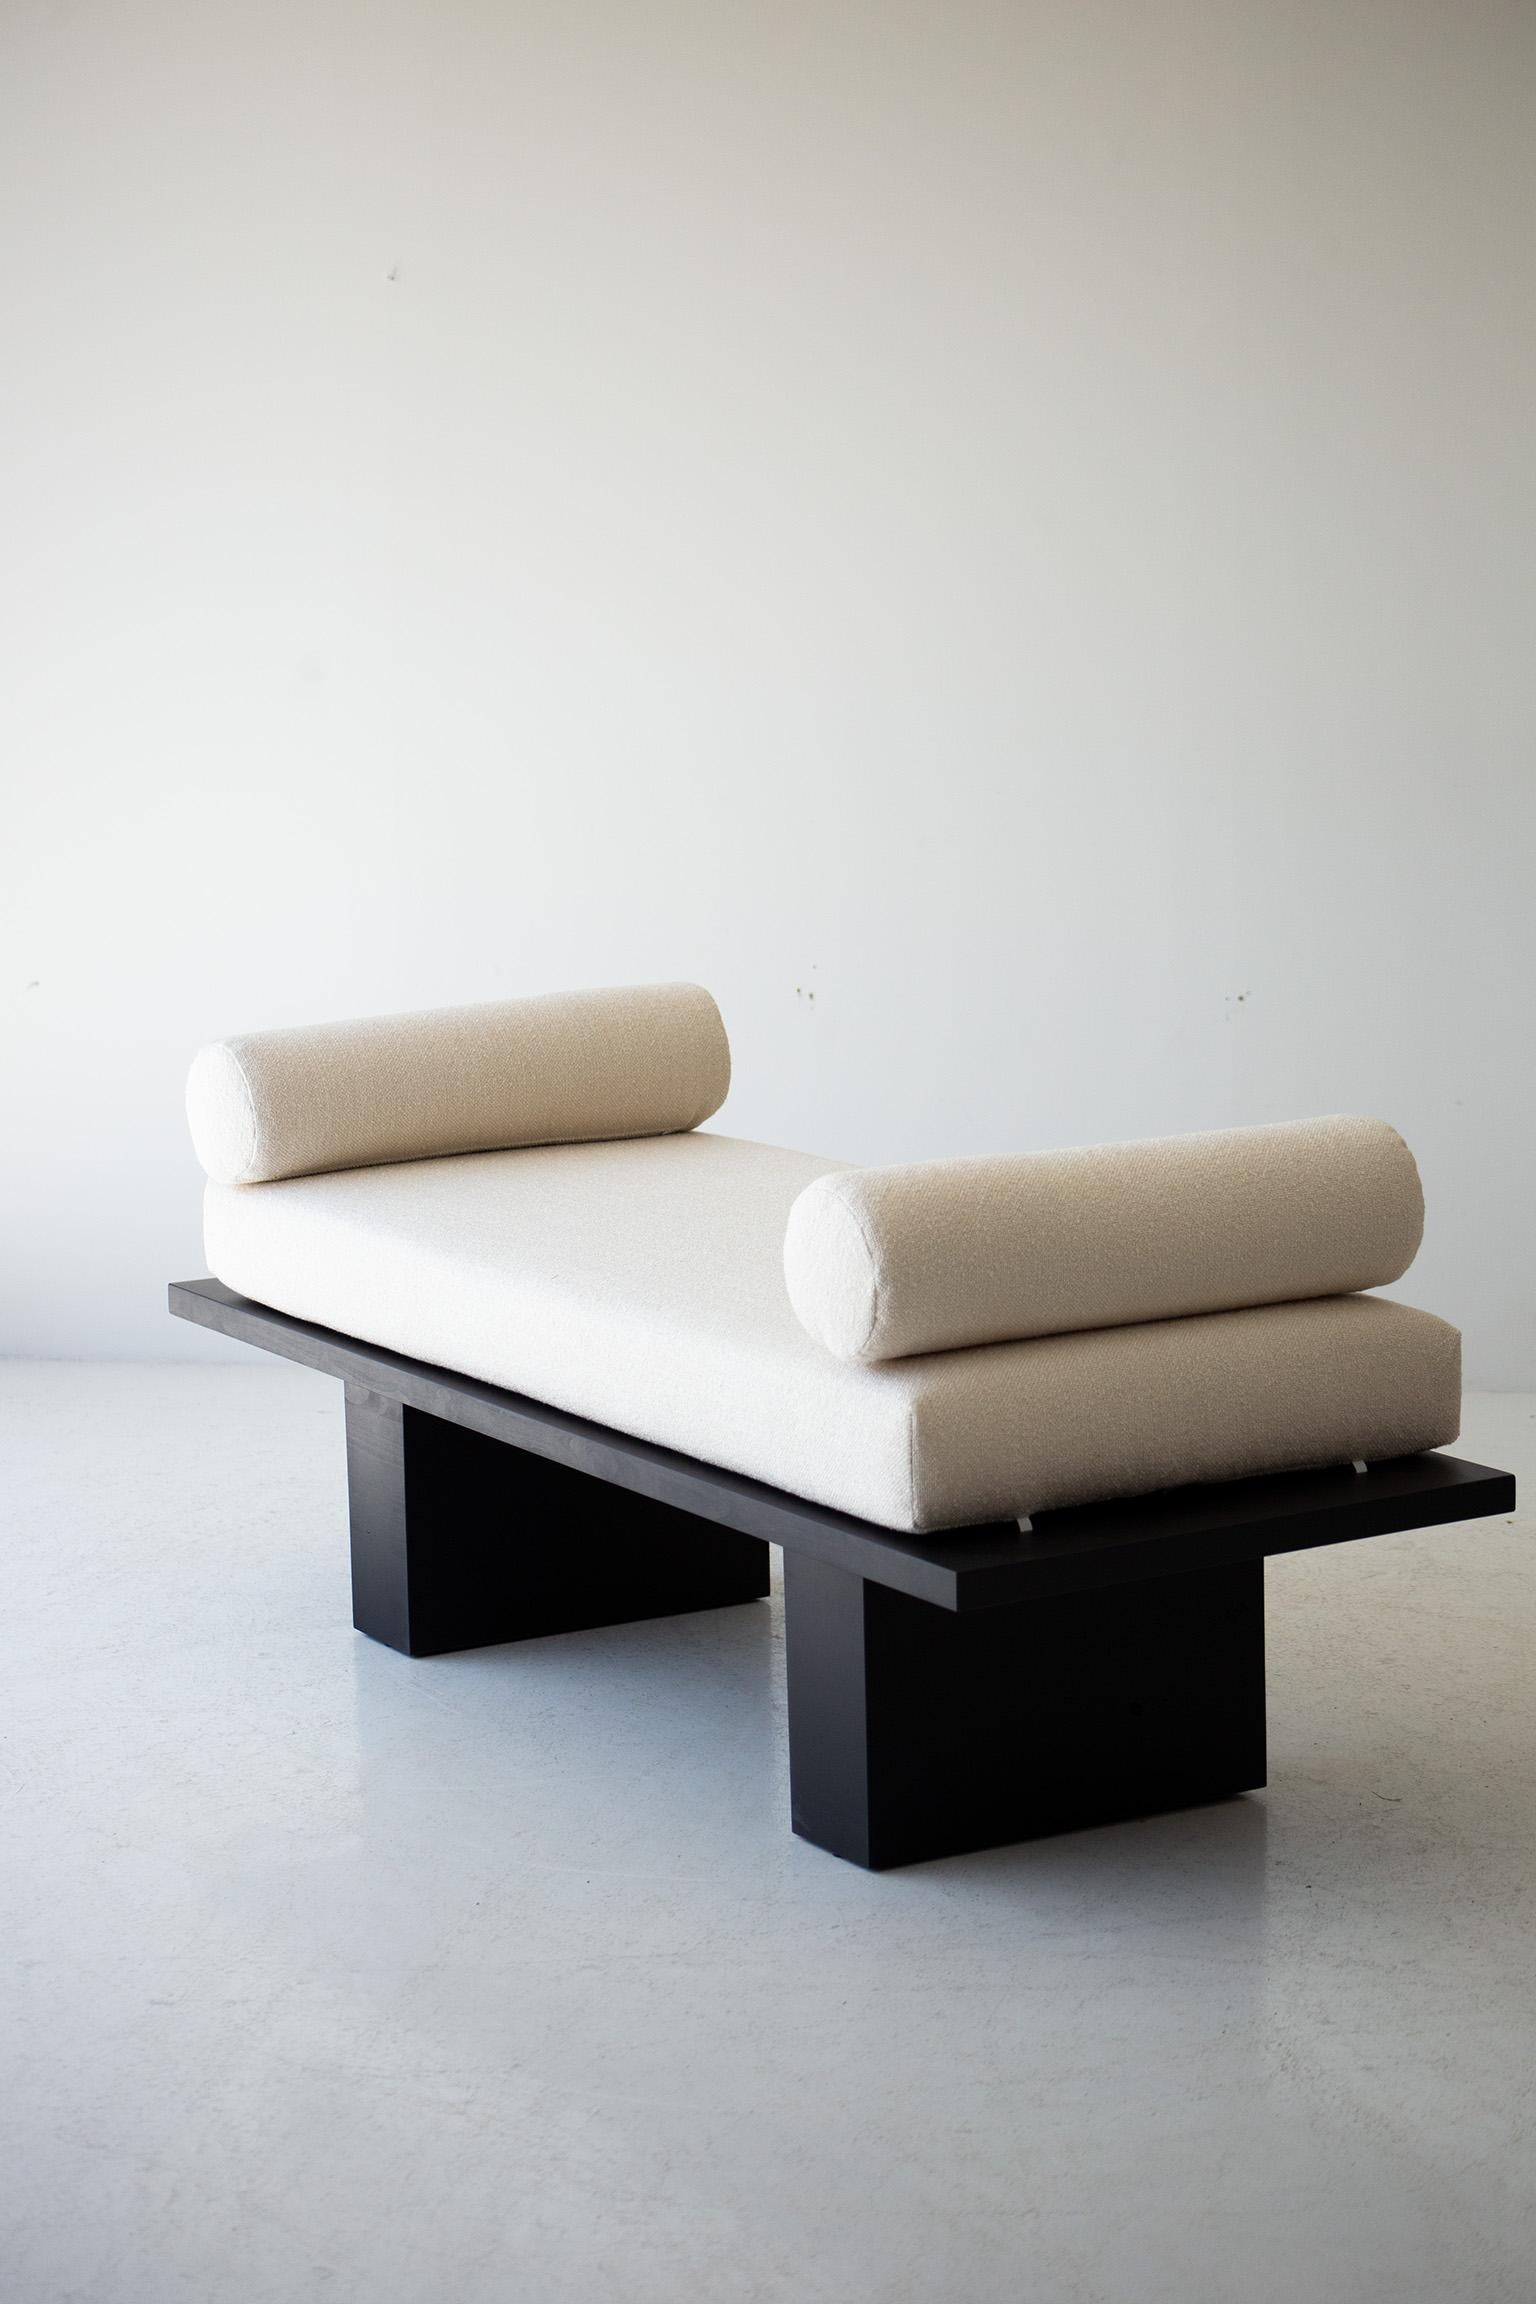 Bertu Benches, Suelo Modern Bench, Lumbar Pillows, Upholstered, White, Black For Sale 2